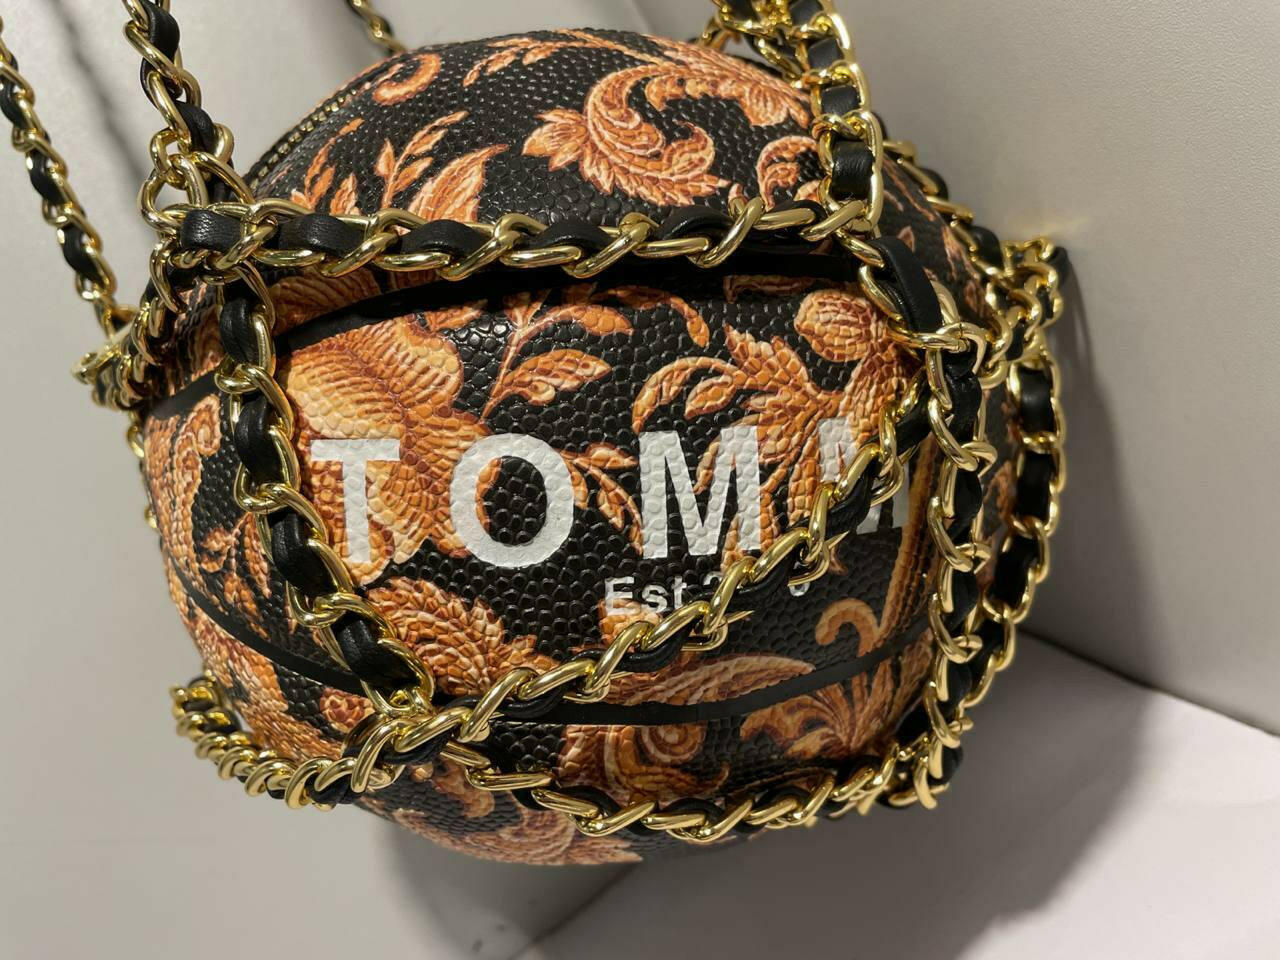 Tomme Customised Basketball Bag